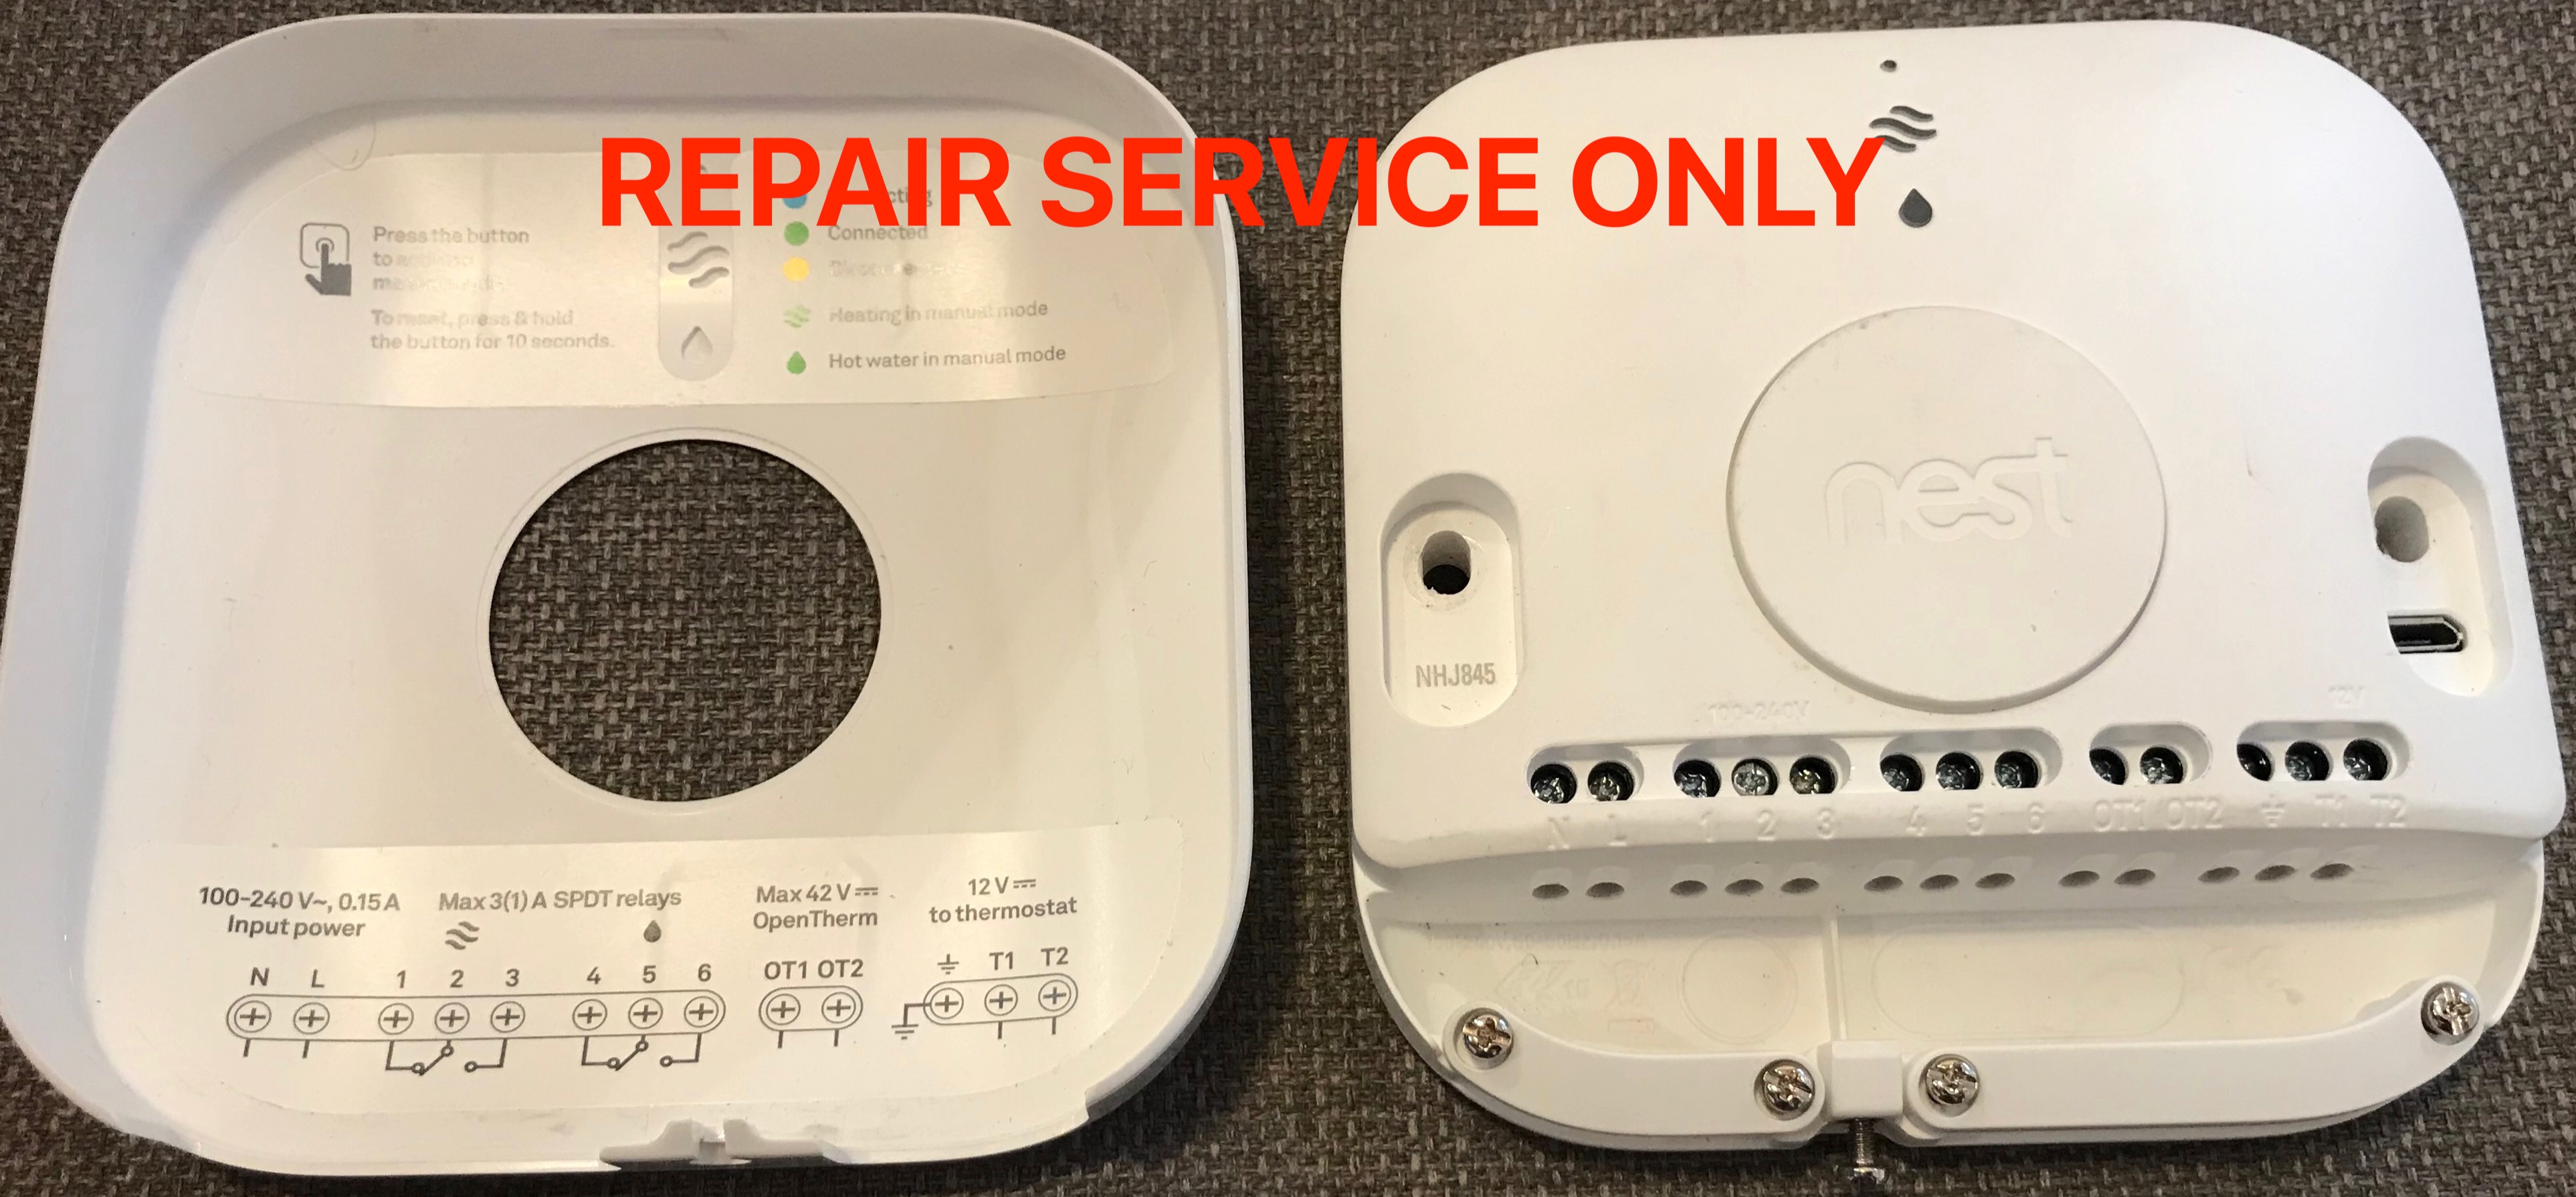 Google Nest Heat Link Repair Service 3rd Gen 12mth wty same day repair